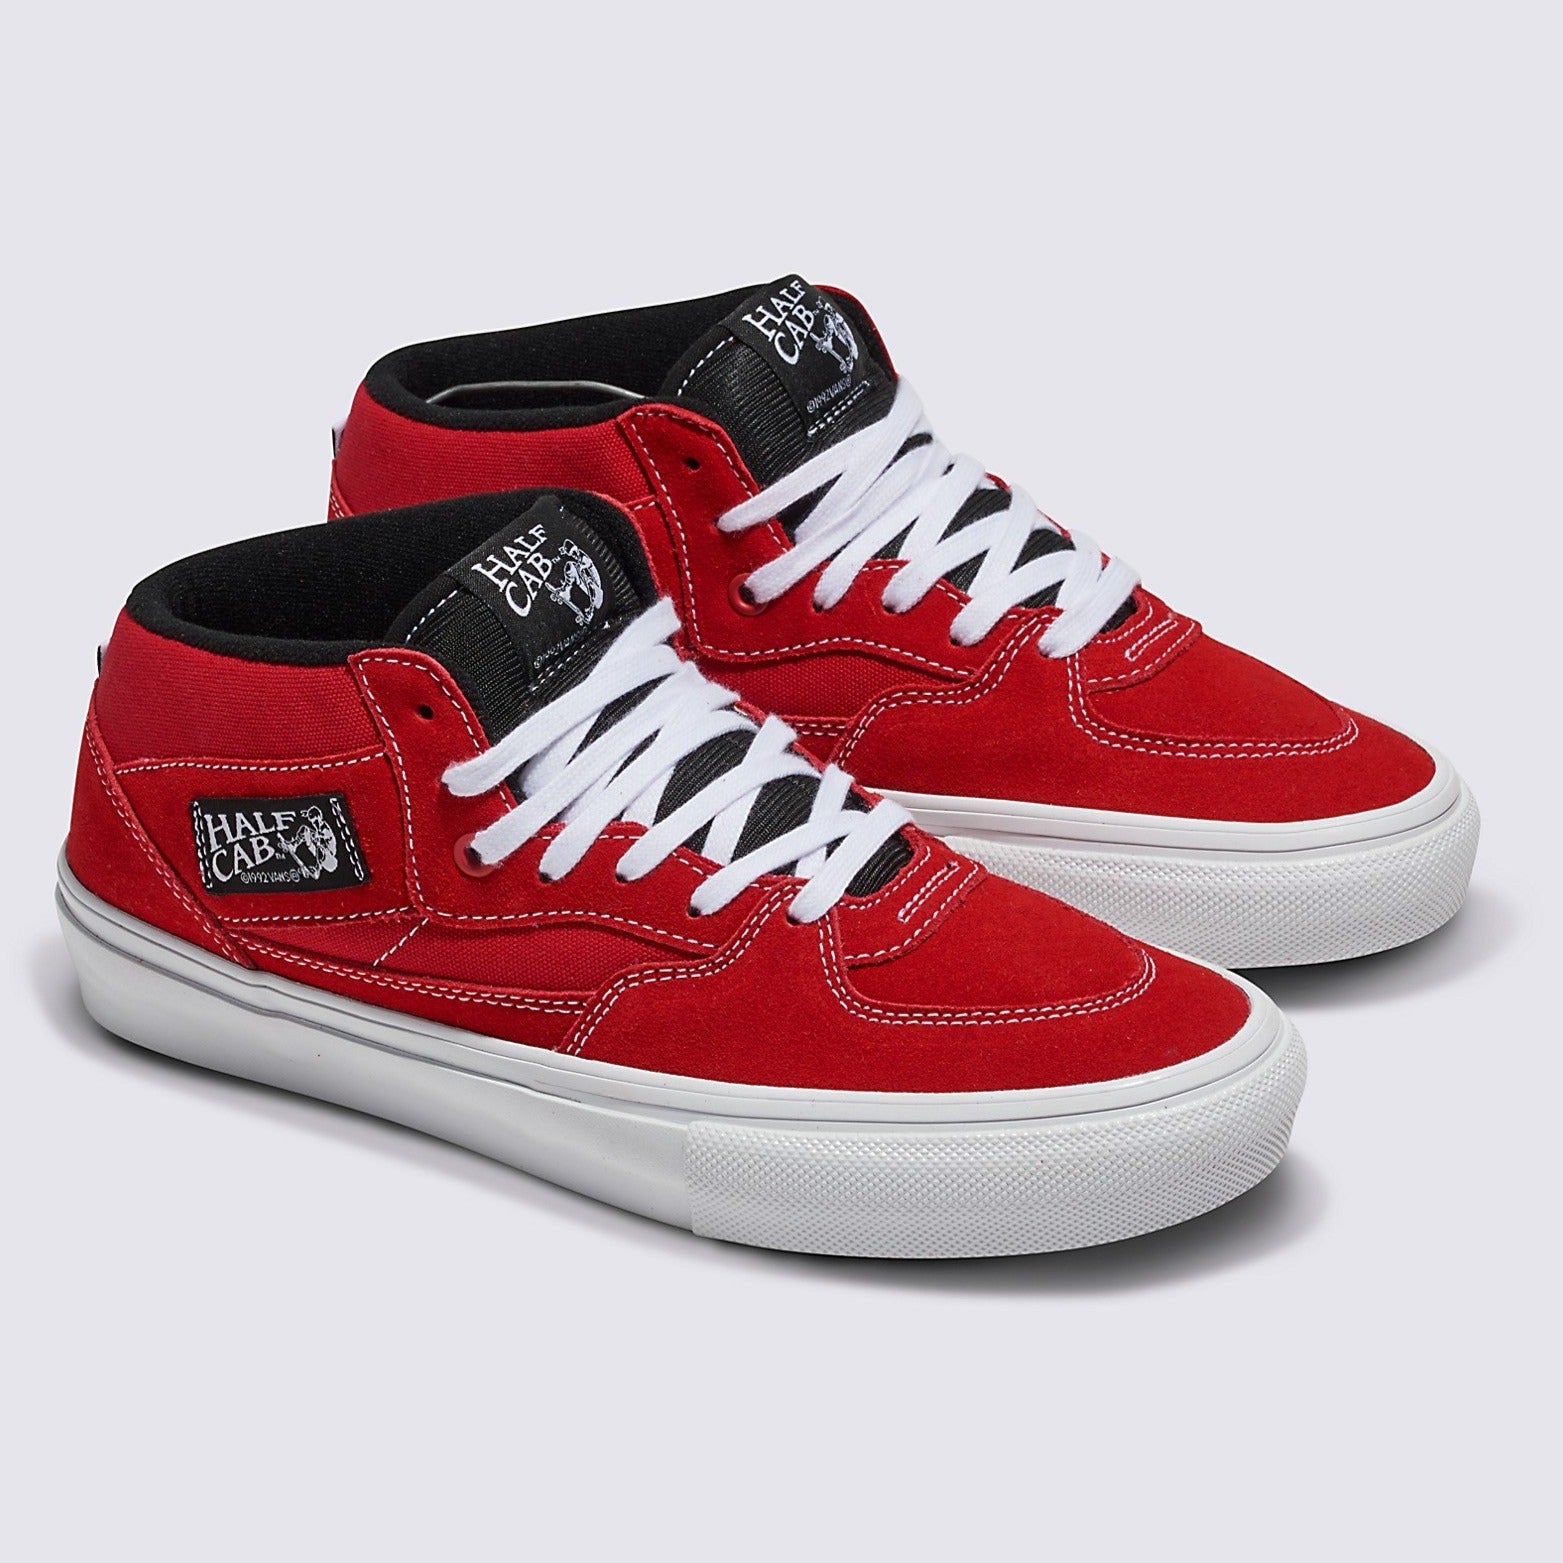 Red/White Skate Half Cab Vans Skate Shoe